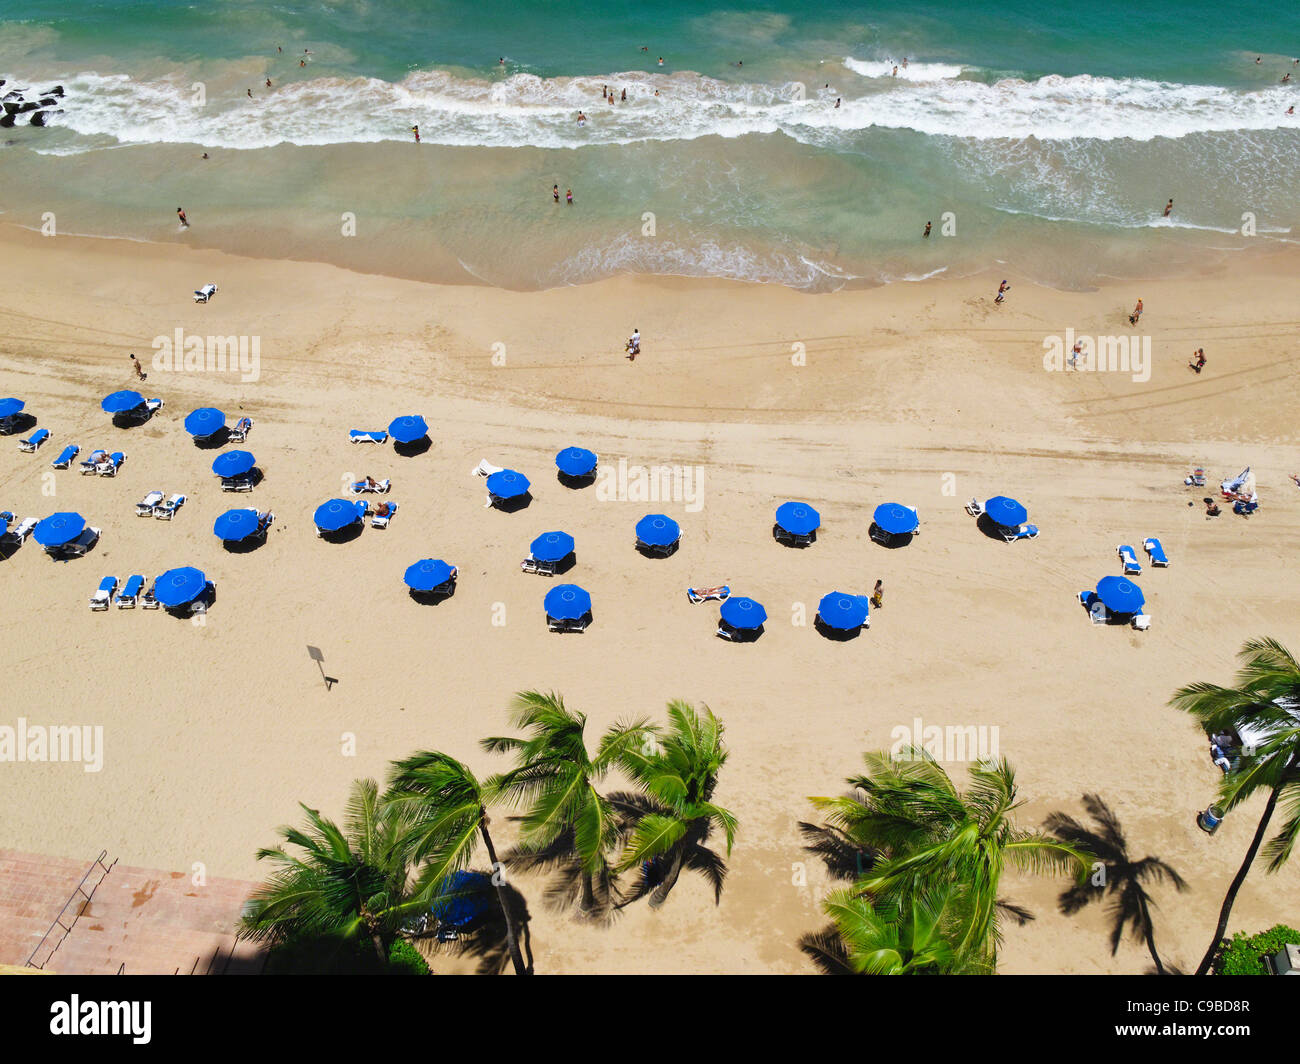 High Angle View of a Beach with Umbreallas and Palm Trees, Condado Beach, San Juan, Puerto Rico Stock Photo